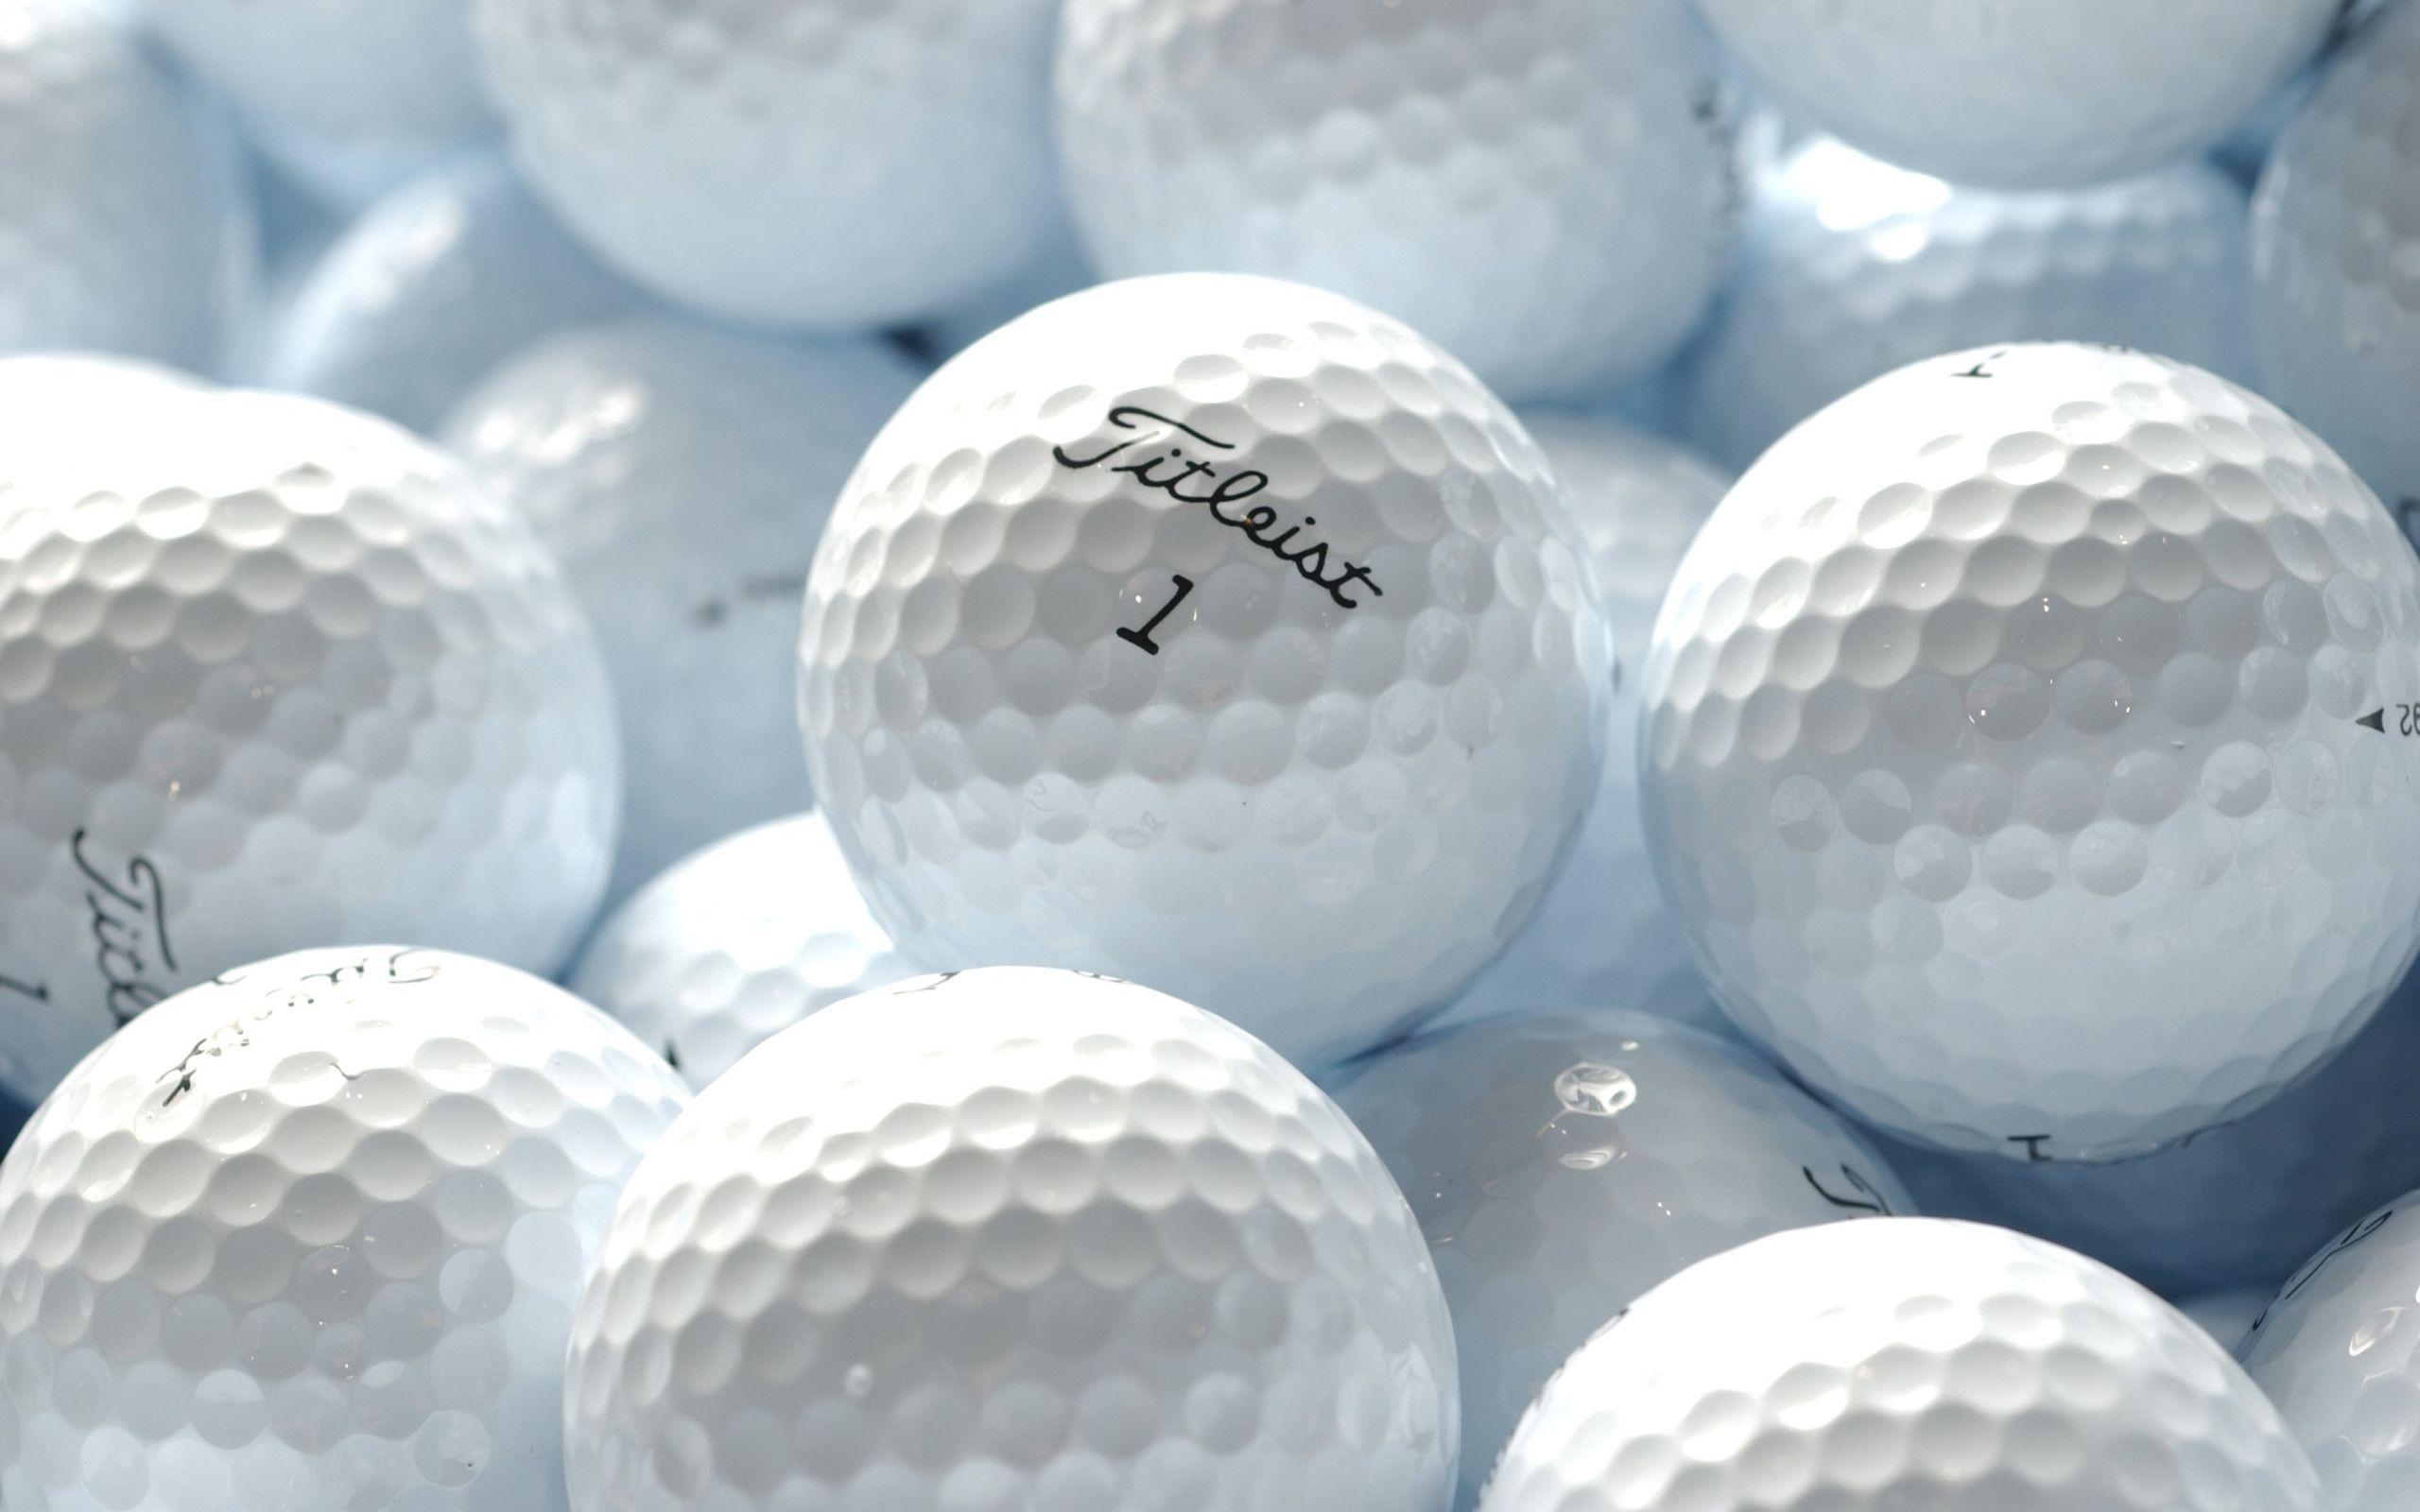 Balls for golf Desktop Wallpaper FREE on Latoro.com